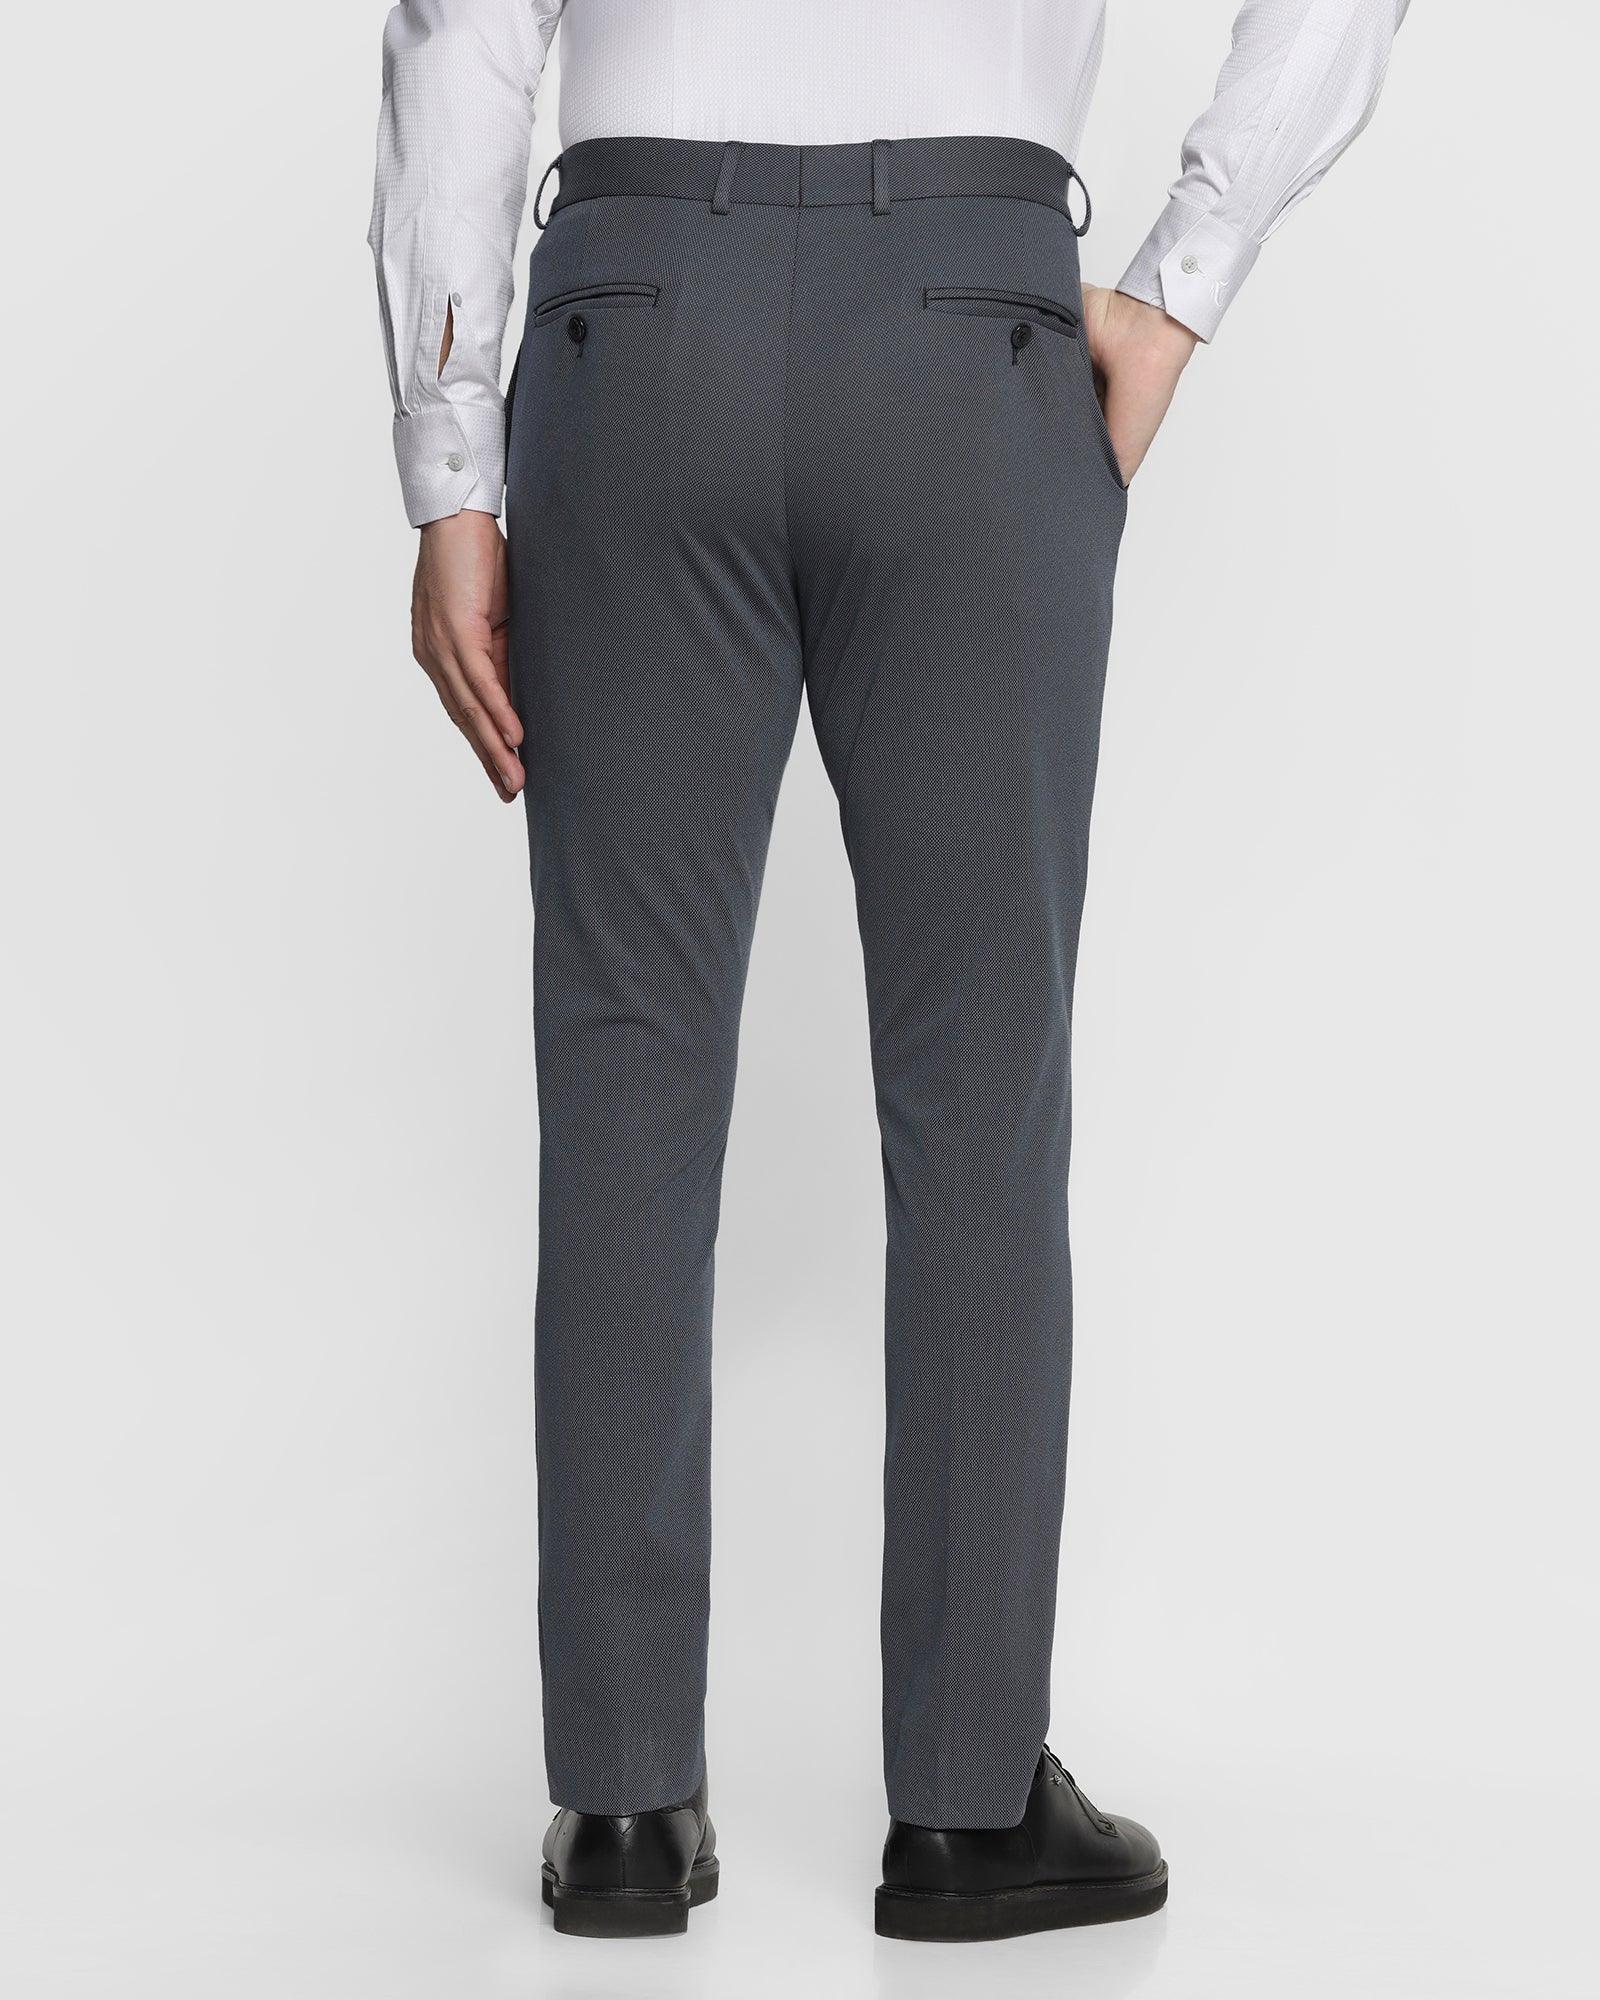 Slim Fit B-91 Formal Blue Textured Trouser - Roman